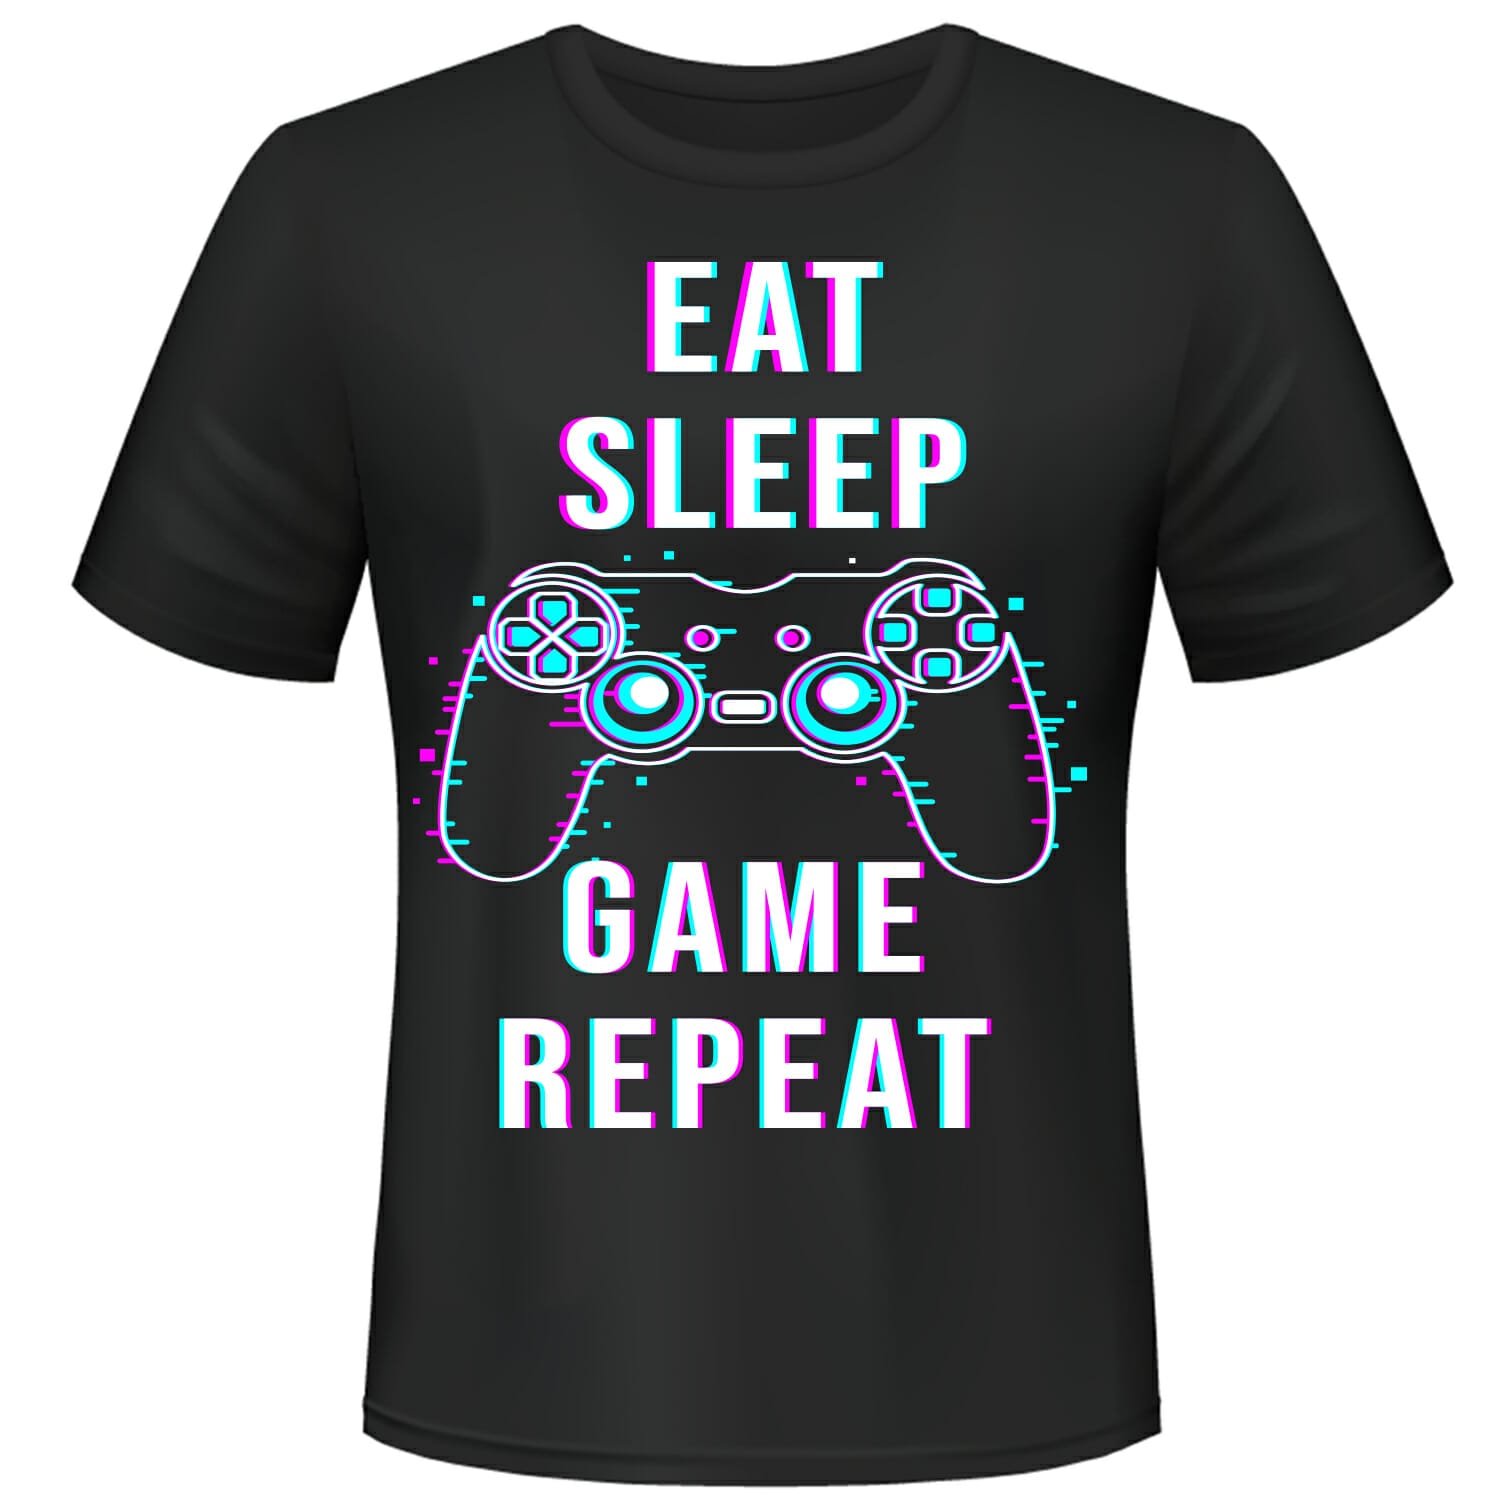 eat sleep game repeat tshirt design